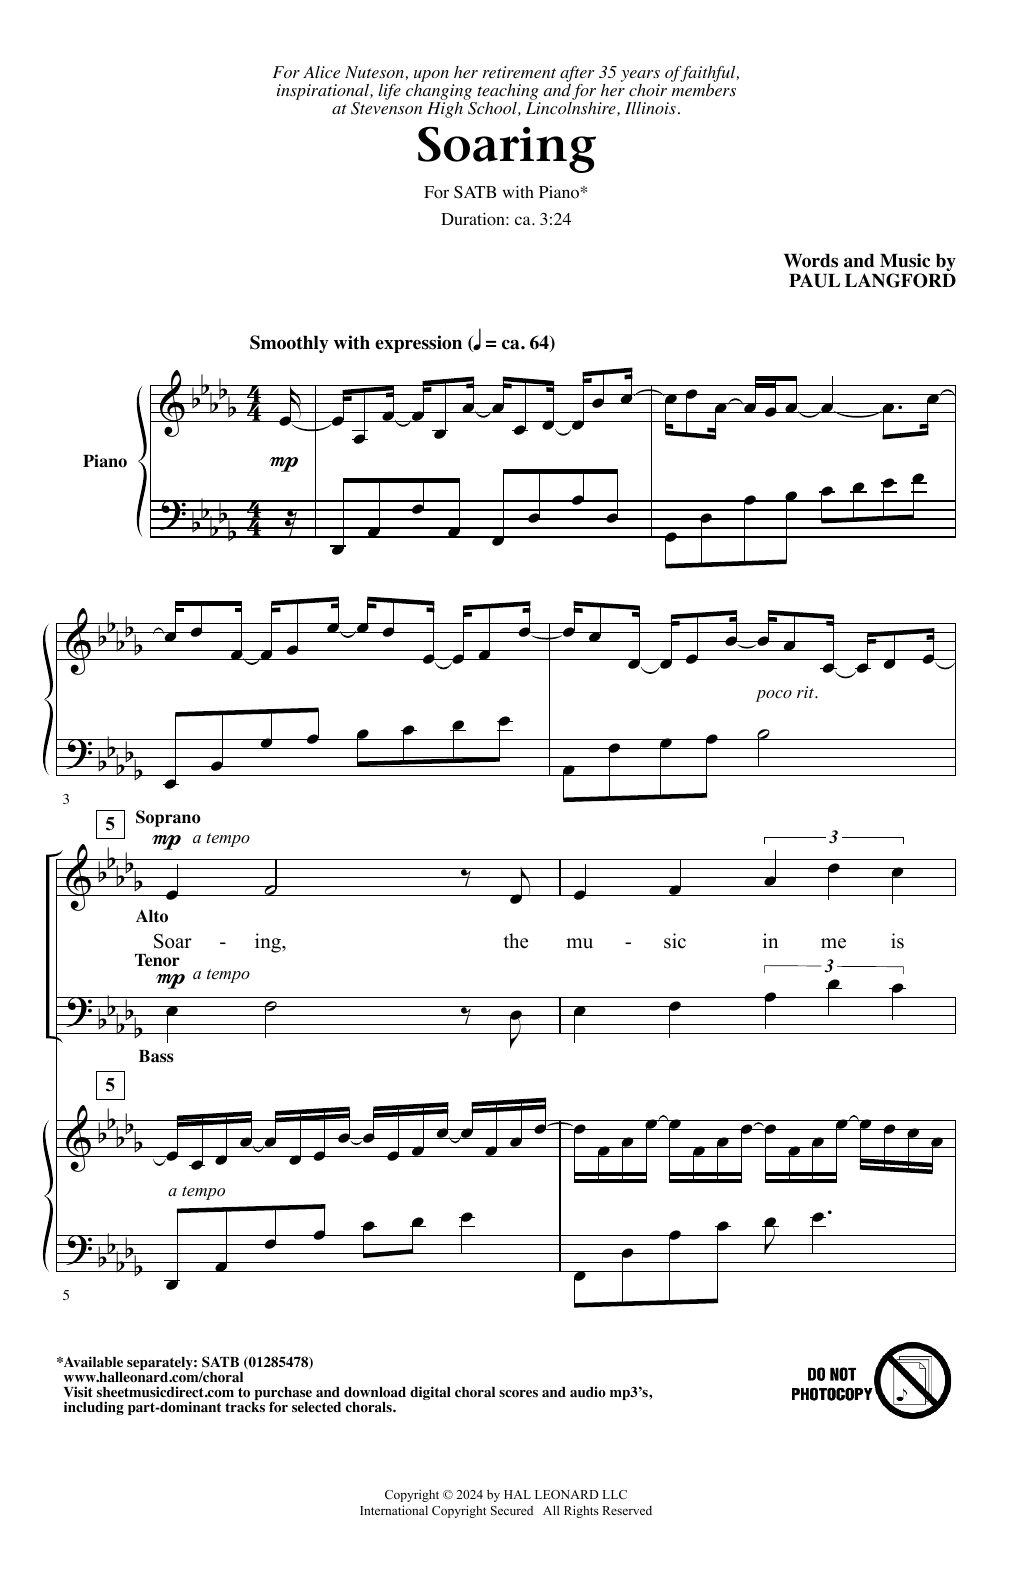 Paul Langford Soaring Sheet Music Notes & Chords for SATB Choir - Download or Print PDF